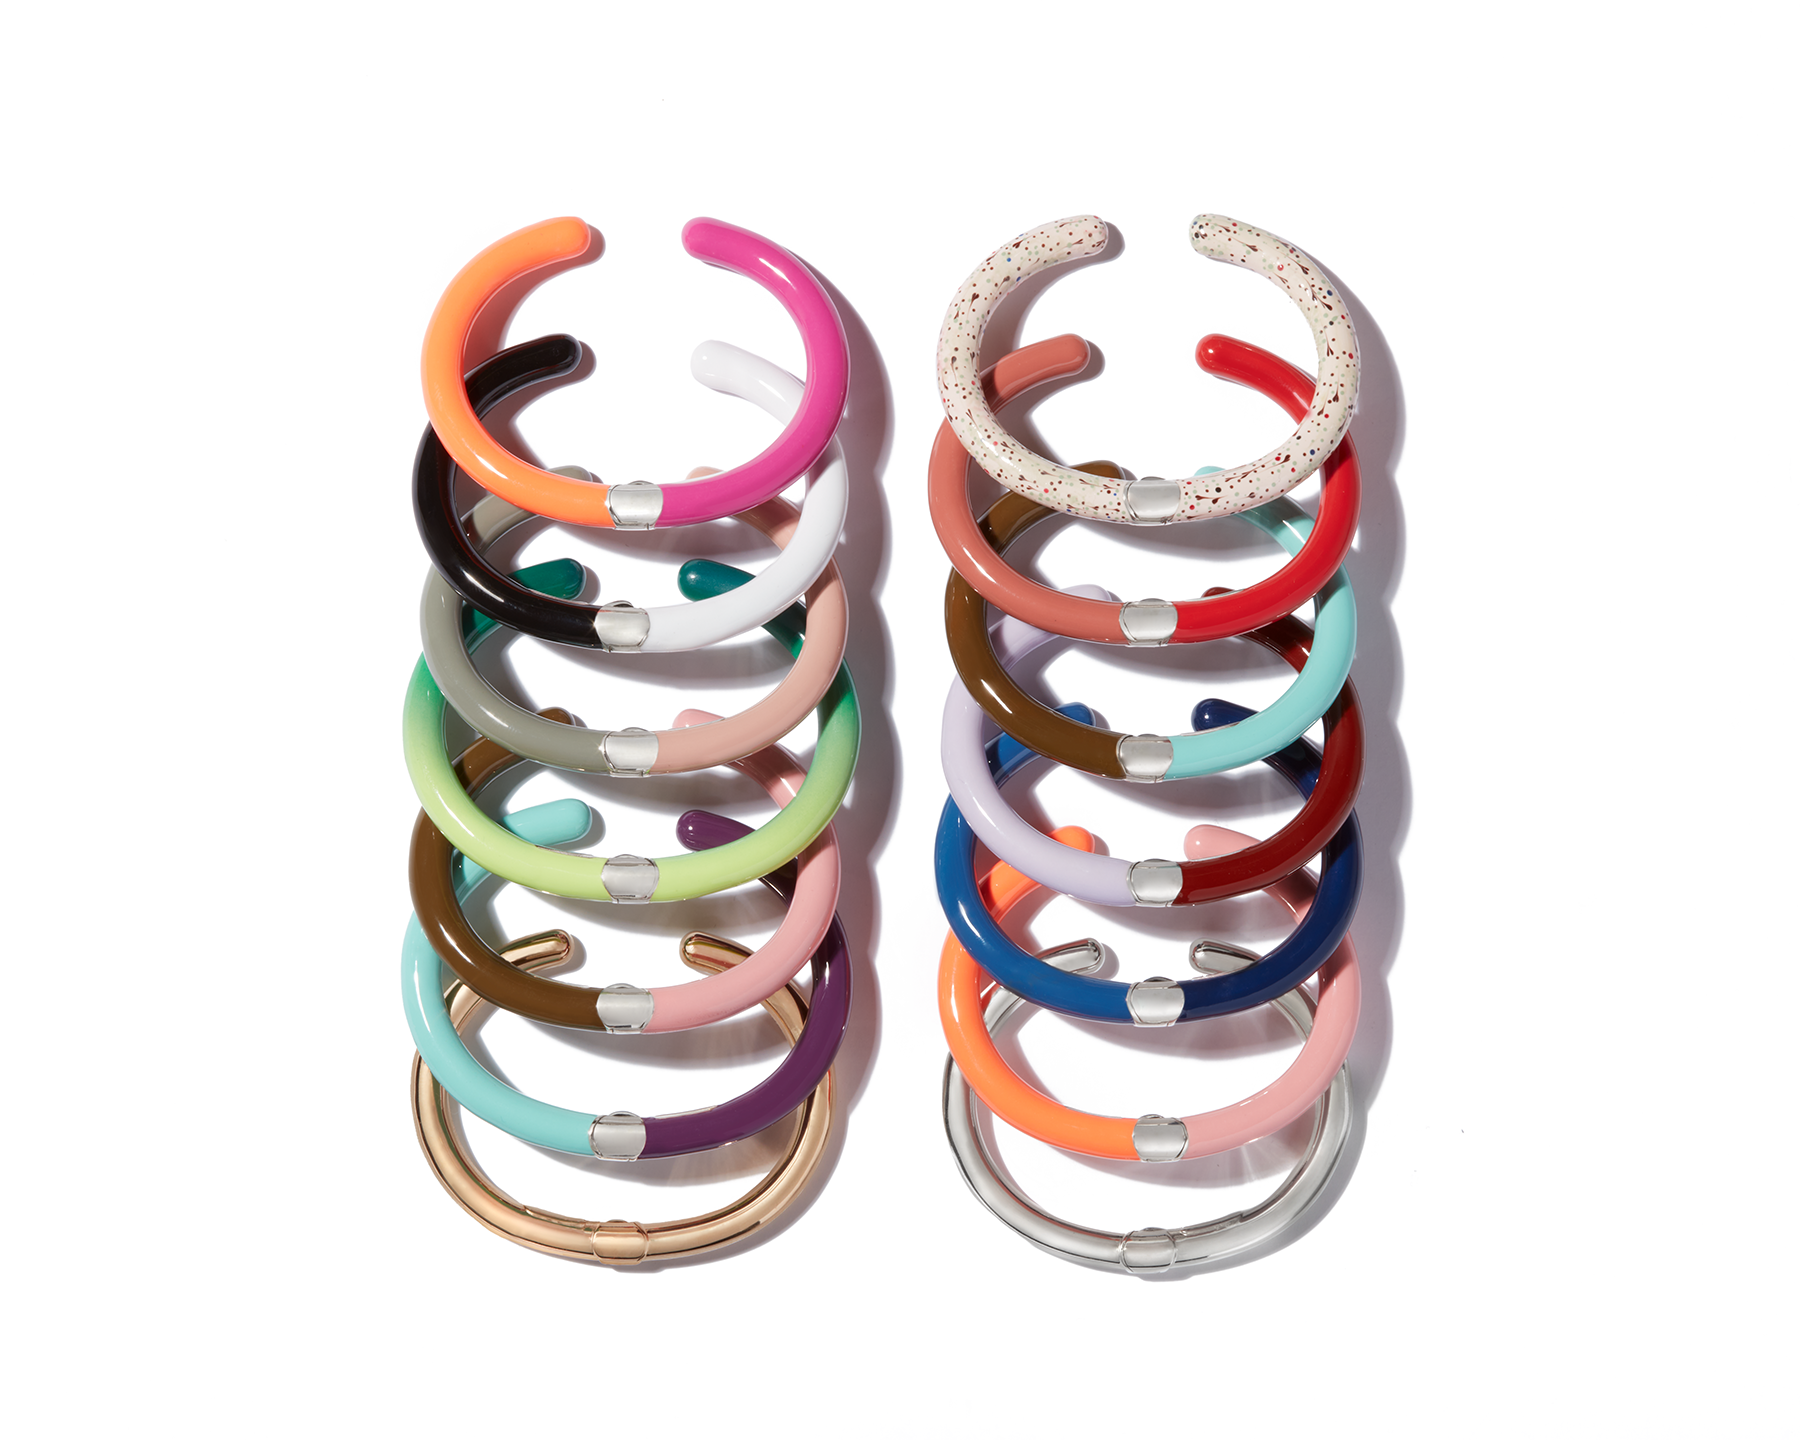 Fourteen different color combination enamel cuff bracelets lined up against white backdrop